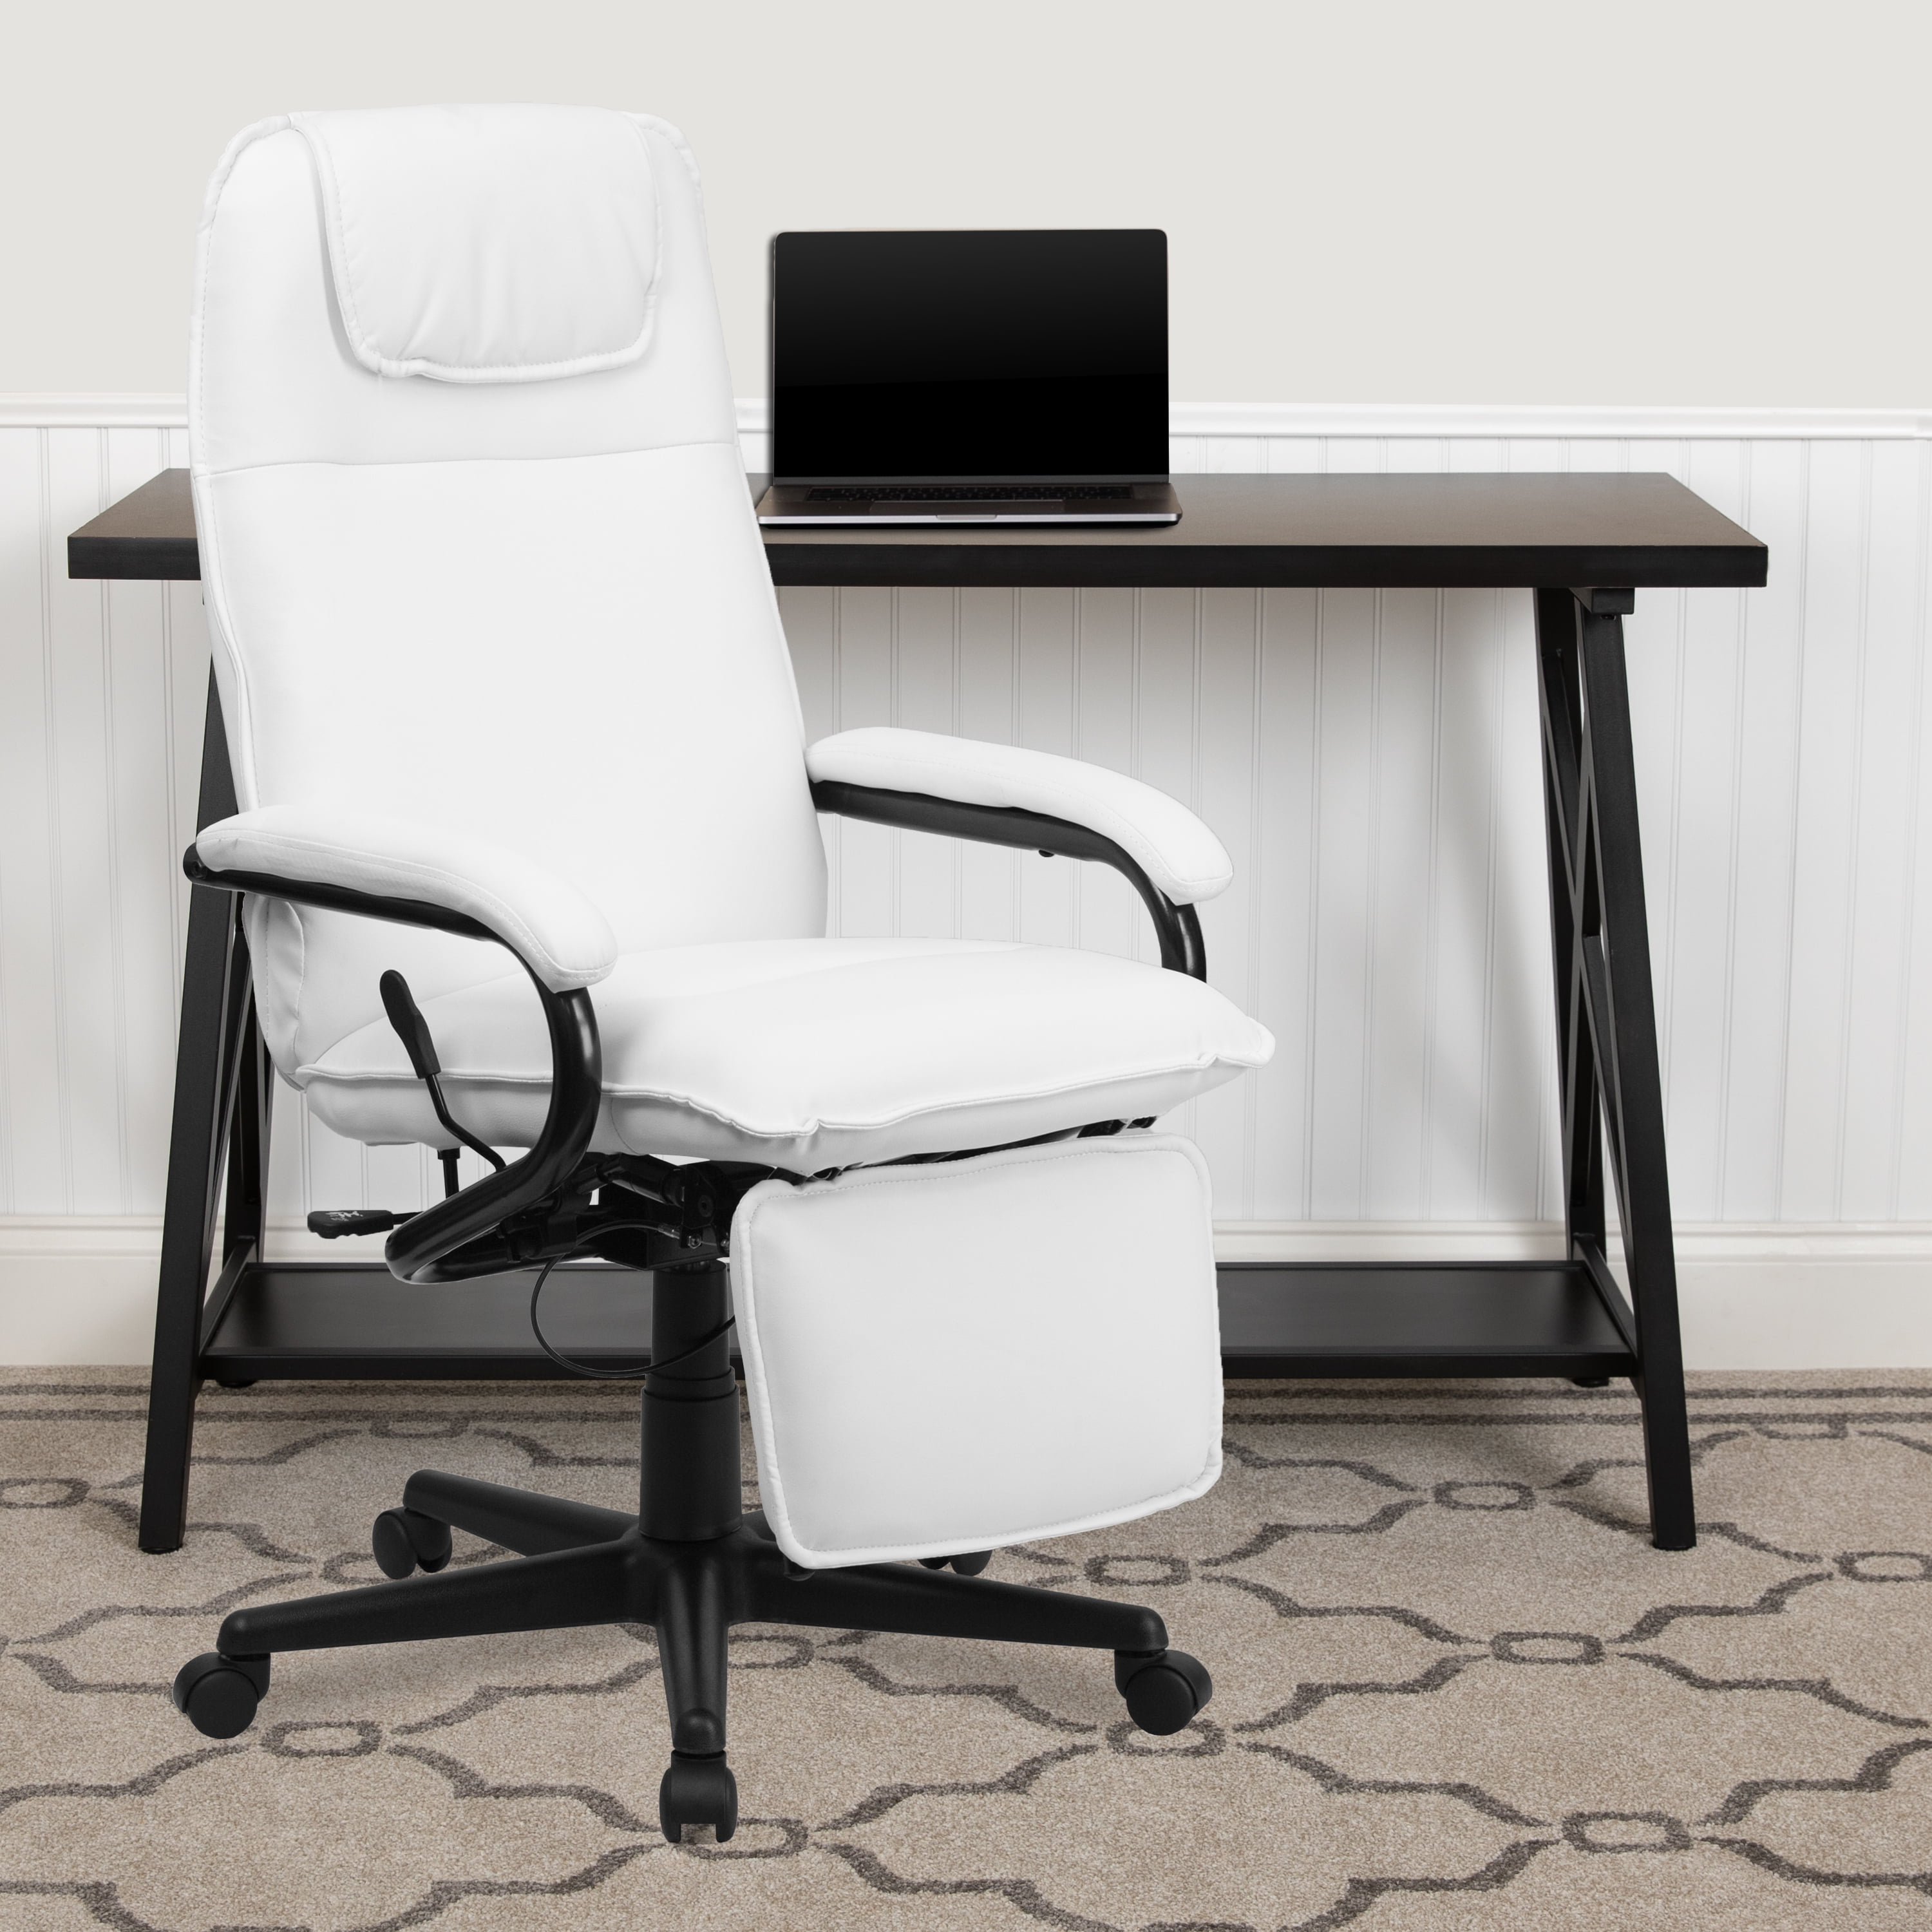 Uenjoy Executive Ergonomic Massage Chair Heated Vibrating Computer Office Desk for sale online 